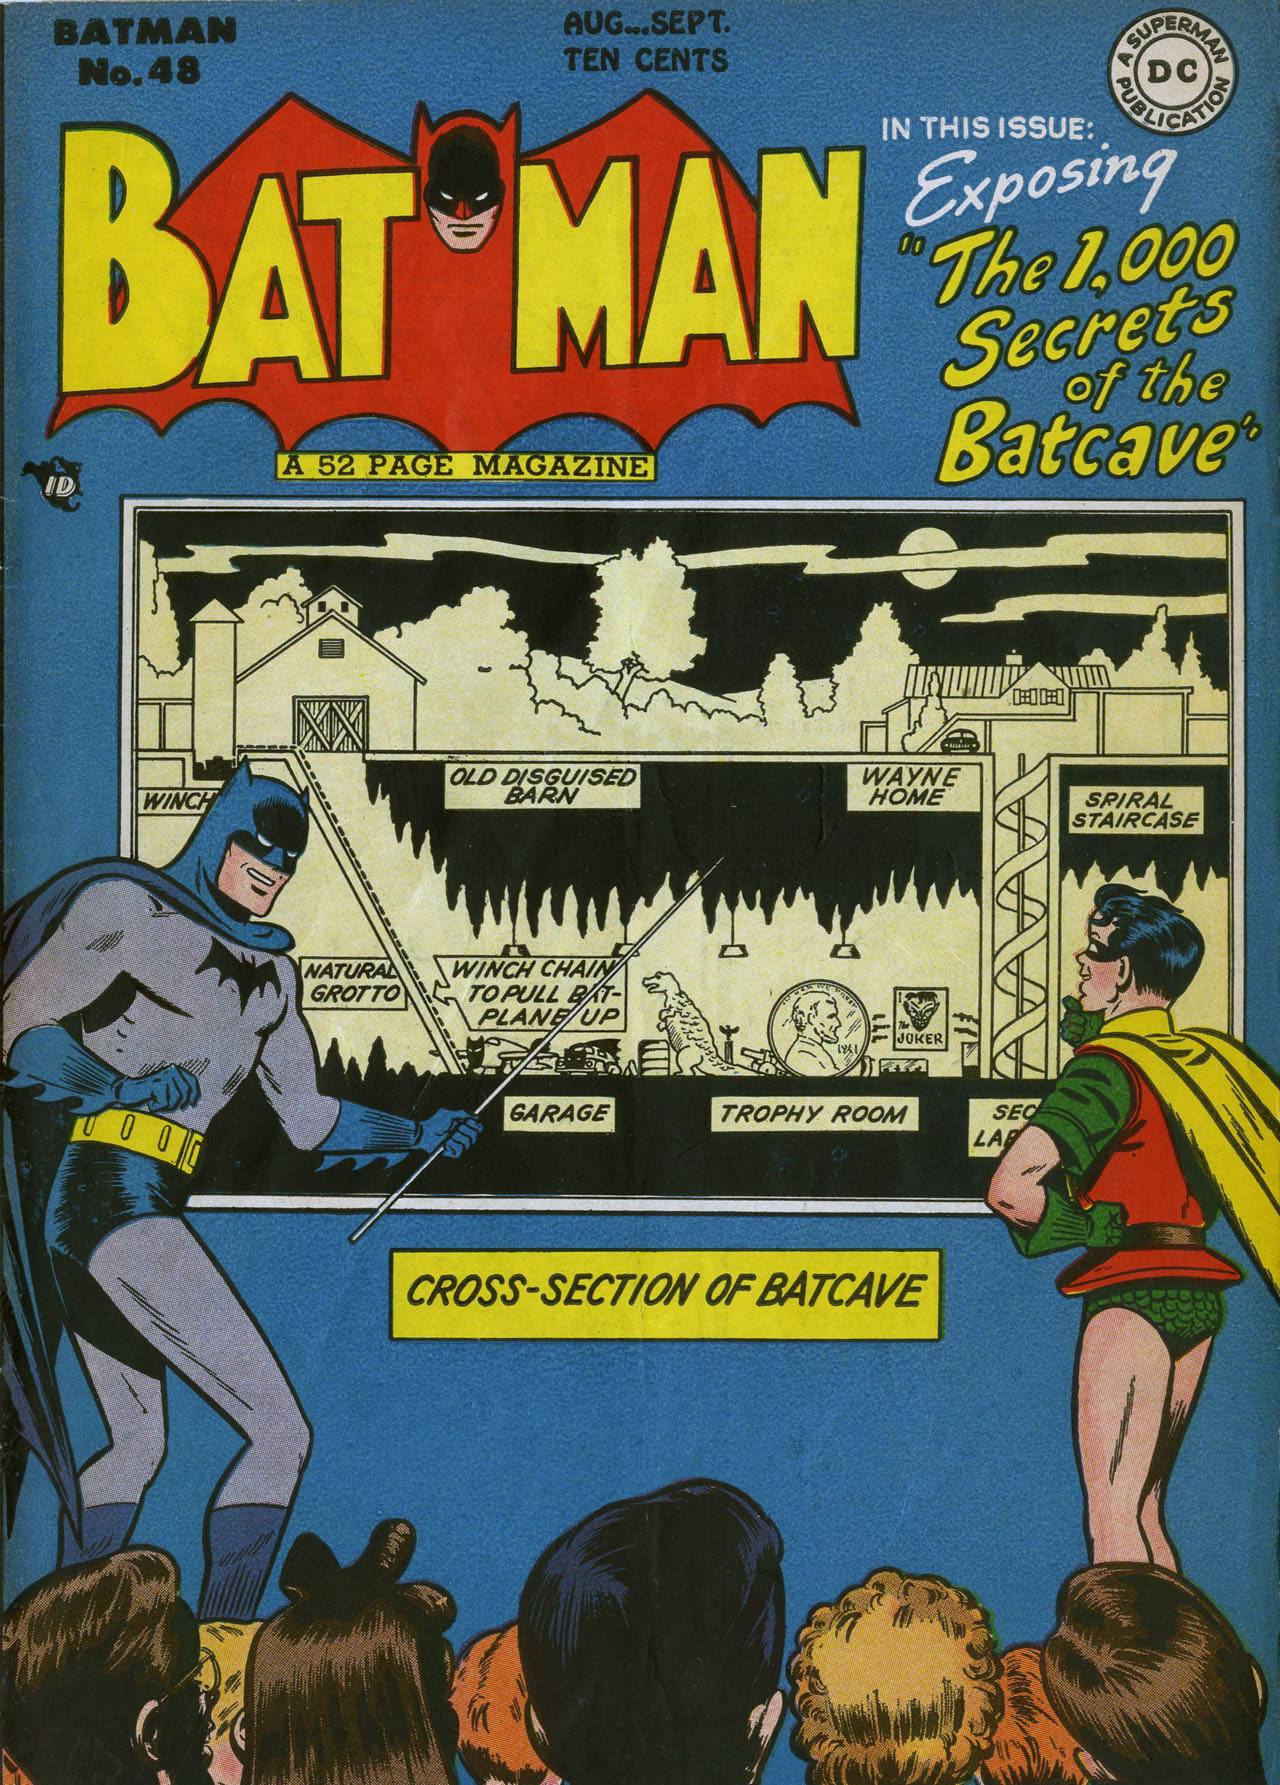 1939 19 Bon Anniversaire Batman Club Comics Sanctuary